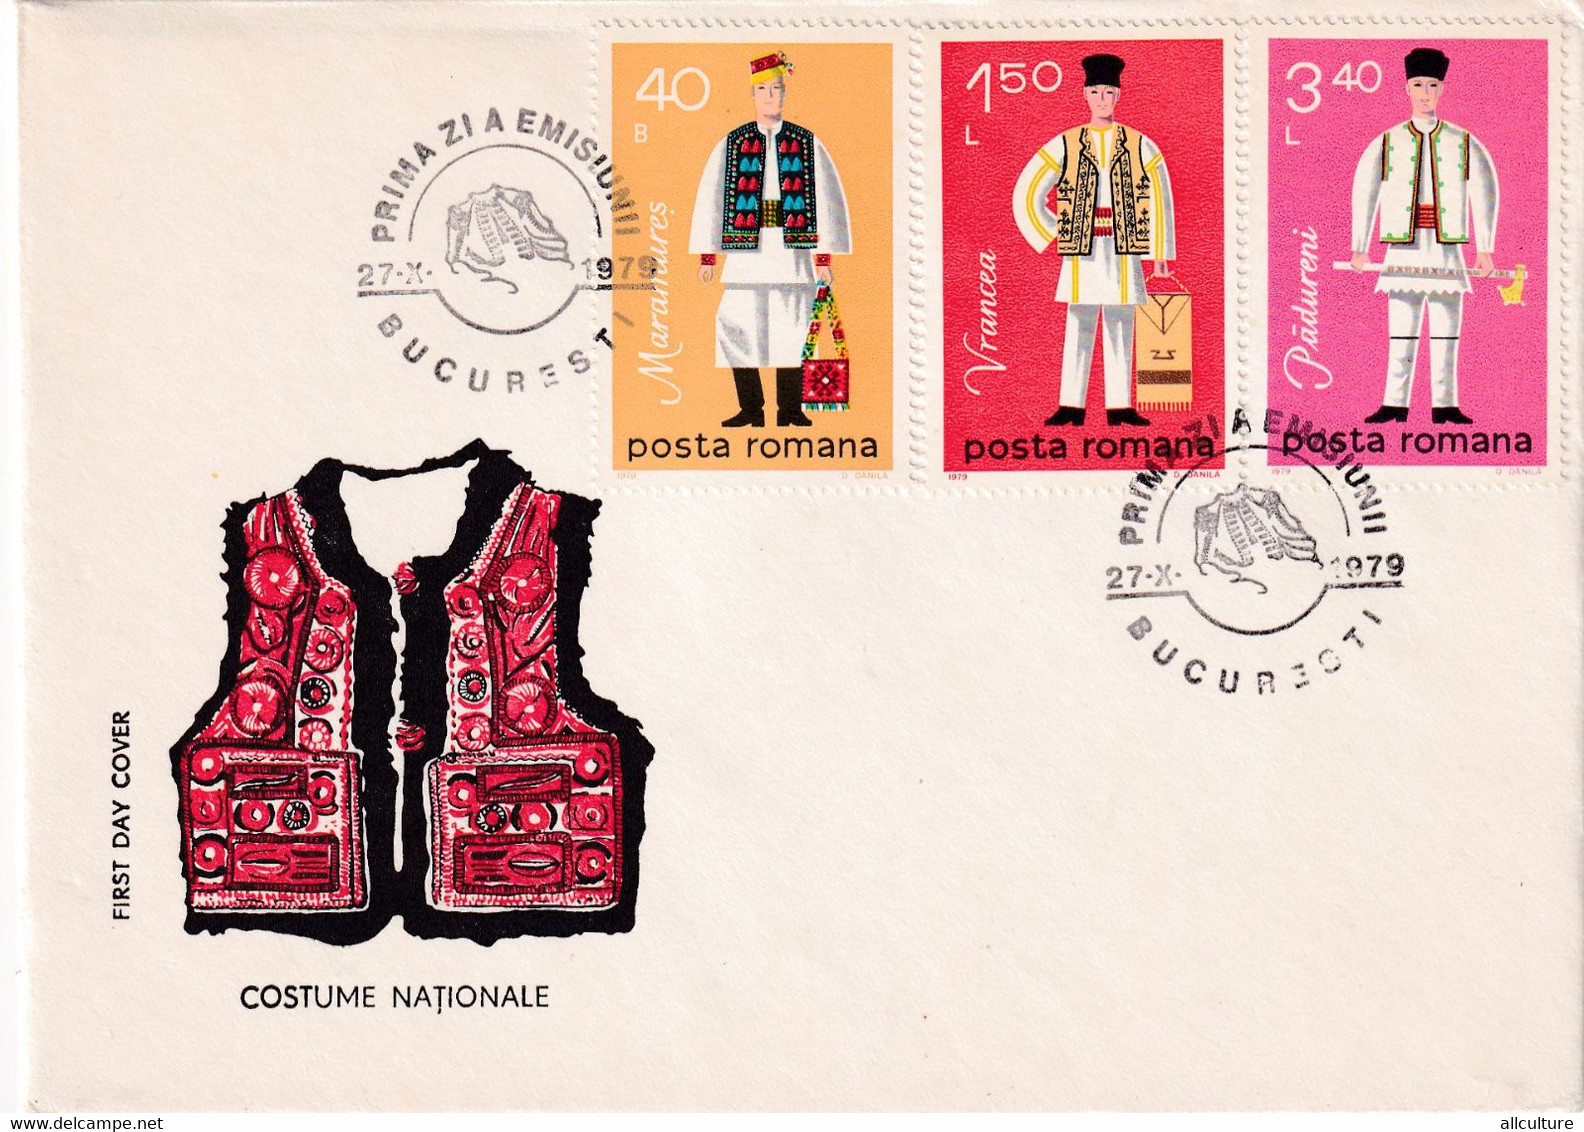 A2738 - Costume Nationale,  Romania, Bucuresti 1979 2 Covers FDC - FDC